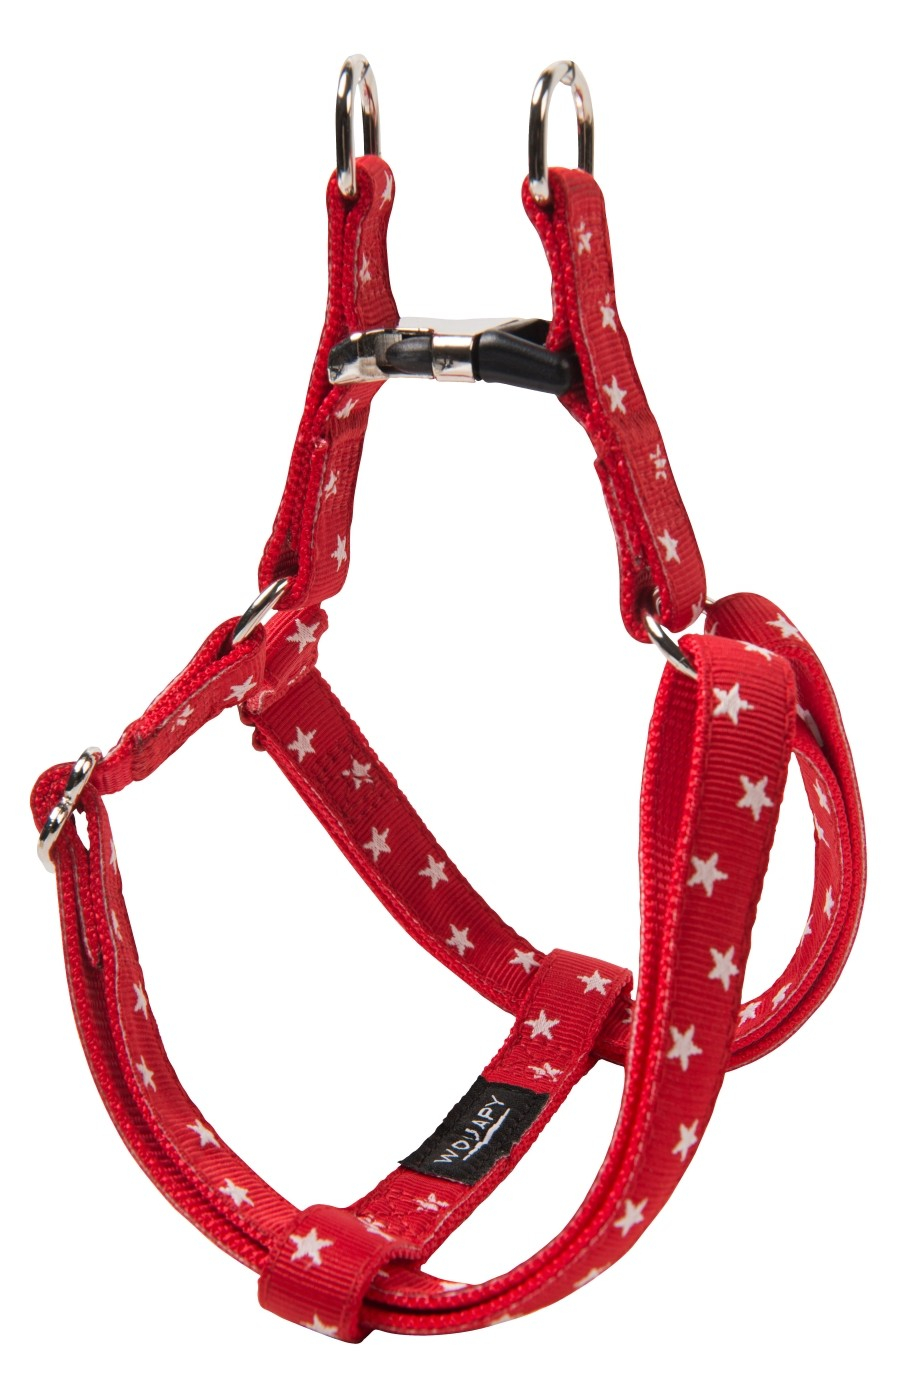 Imbragatura paracadute per cani STAR di Wouapy